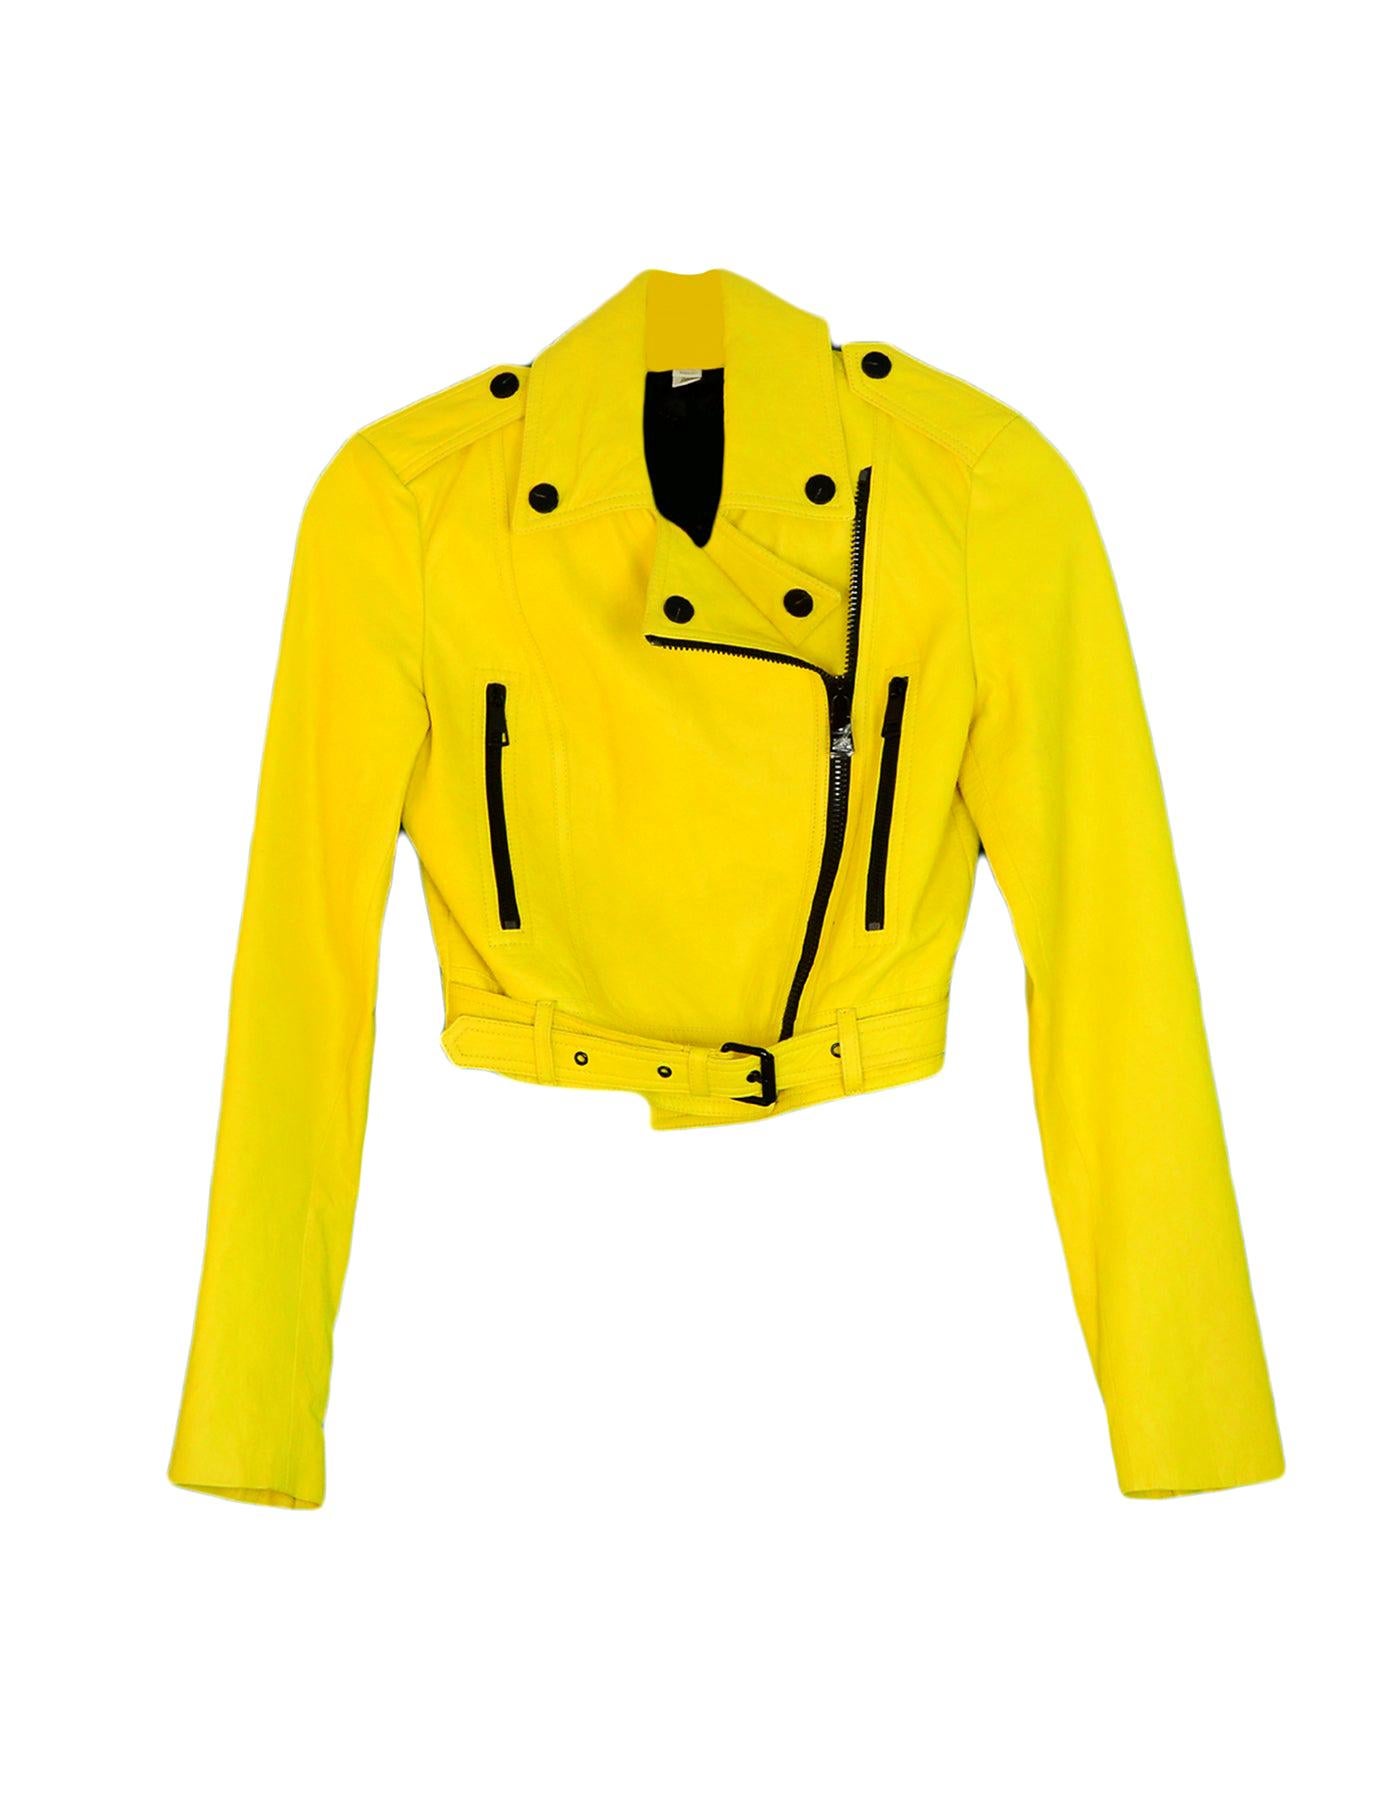 Burberry London Yellow Leather Moto Jacket w Black Zippers sz 2